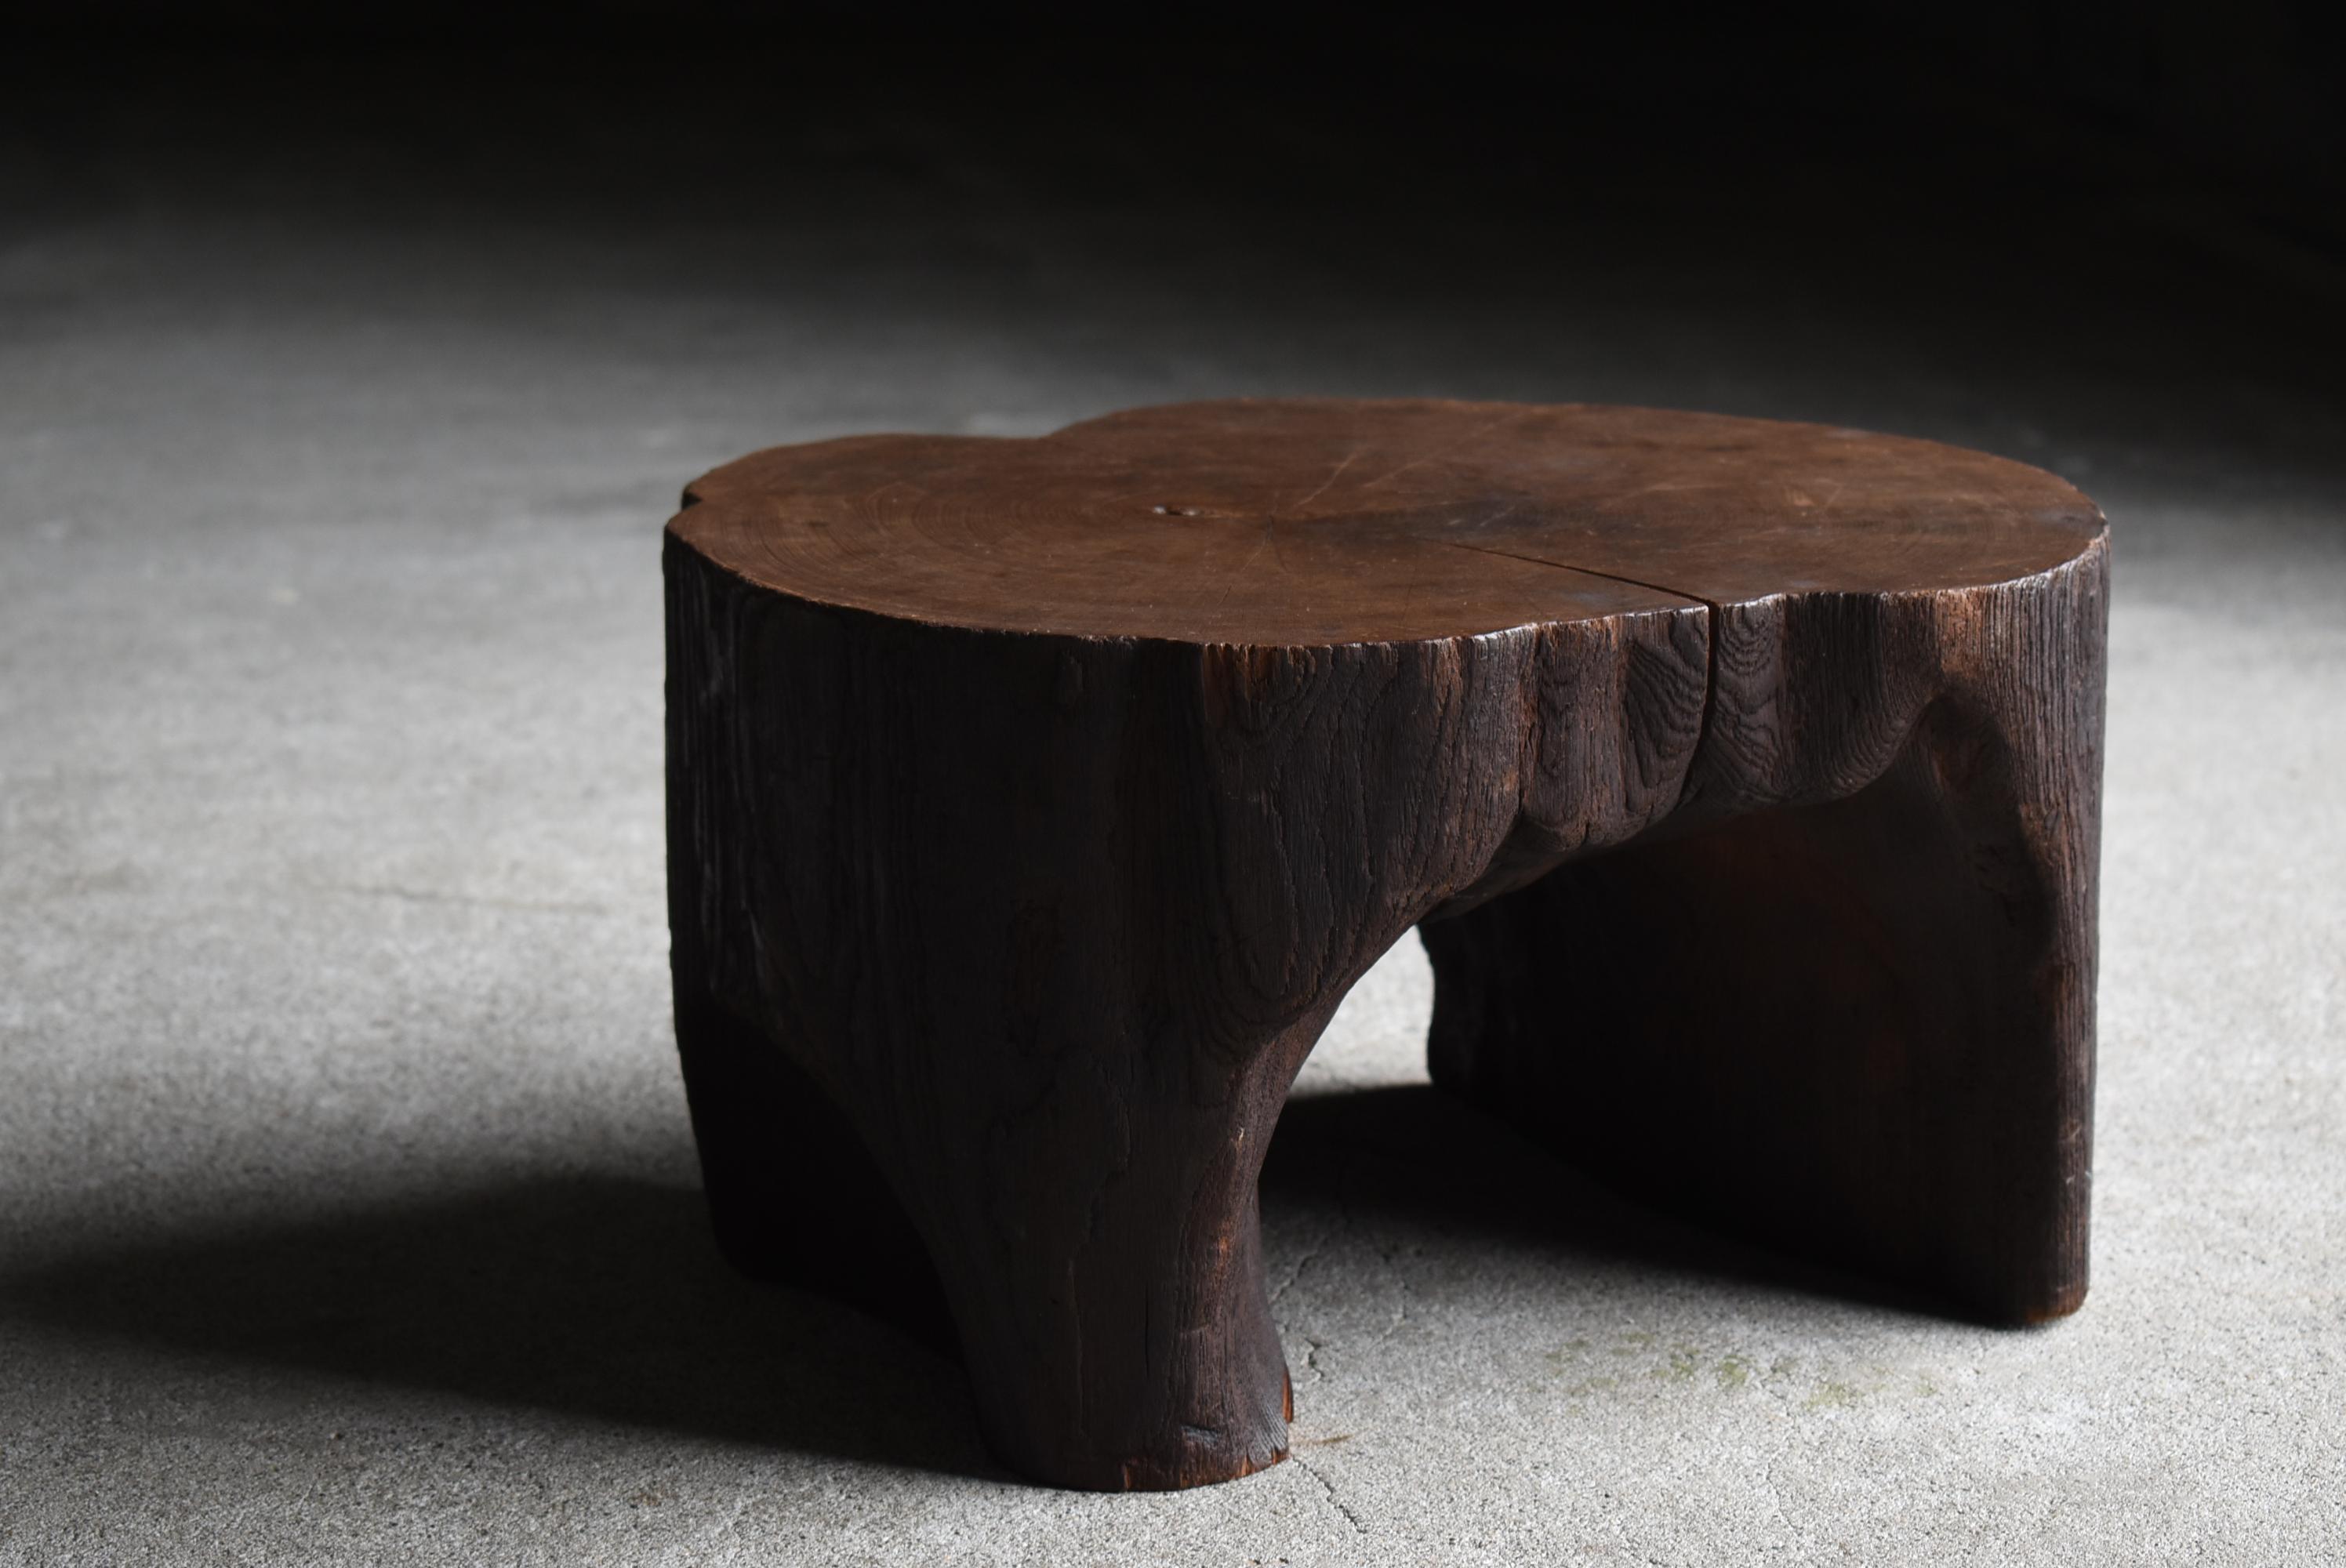 Meiji Japanese Antique Primitive Stool 1860s-1900s / Side Table Wood Chair Wabisabi